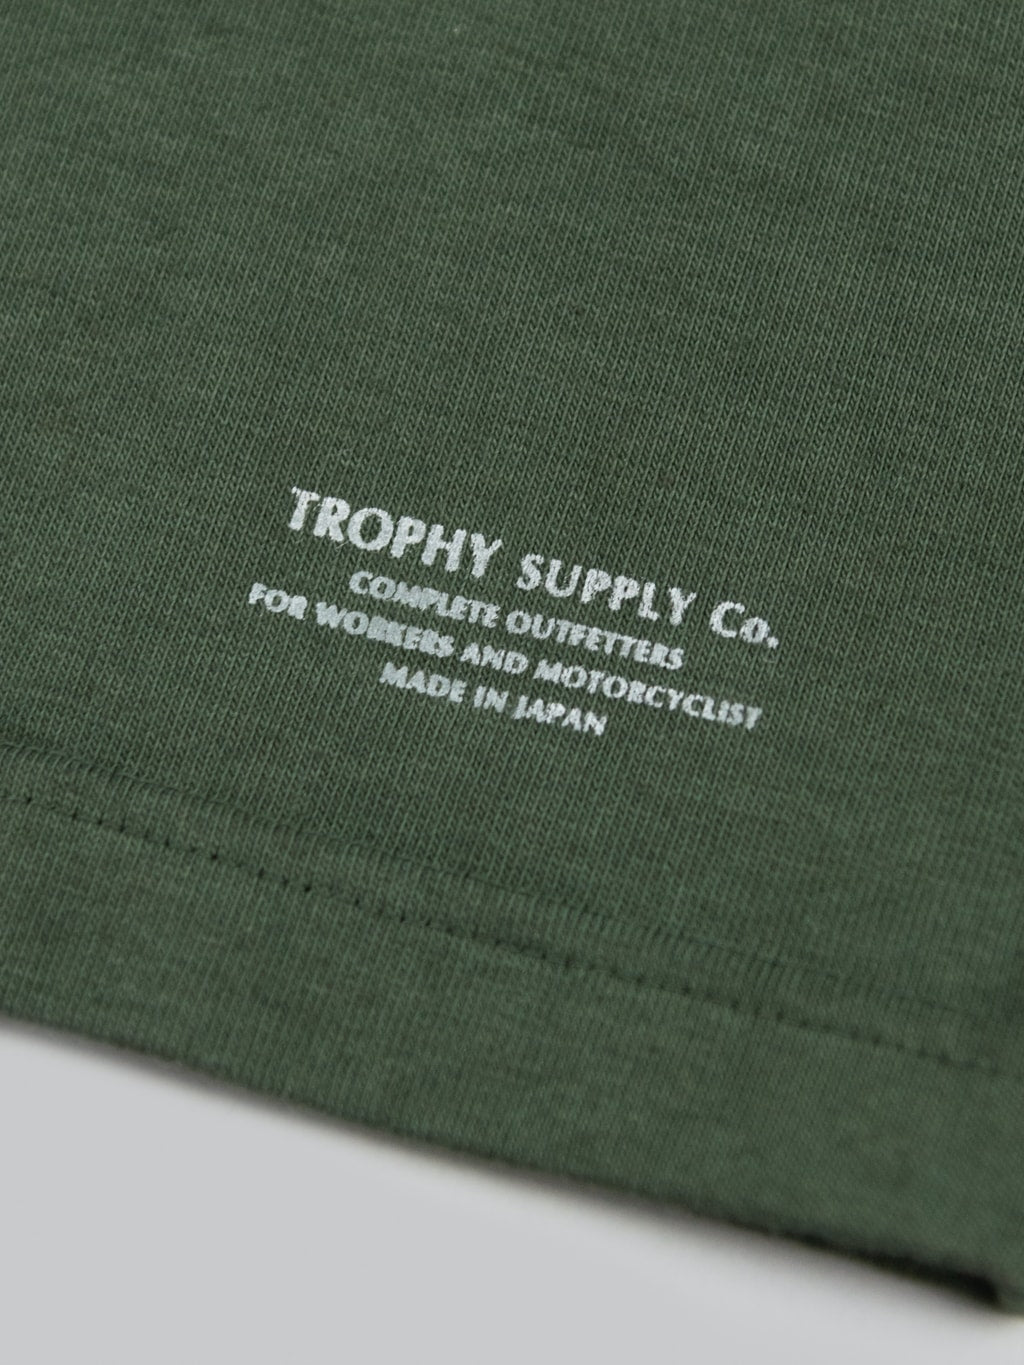 trophy clothing od pocket tee olive printed branding